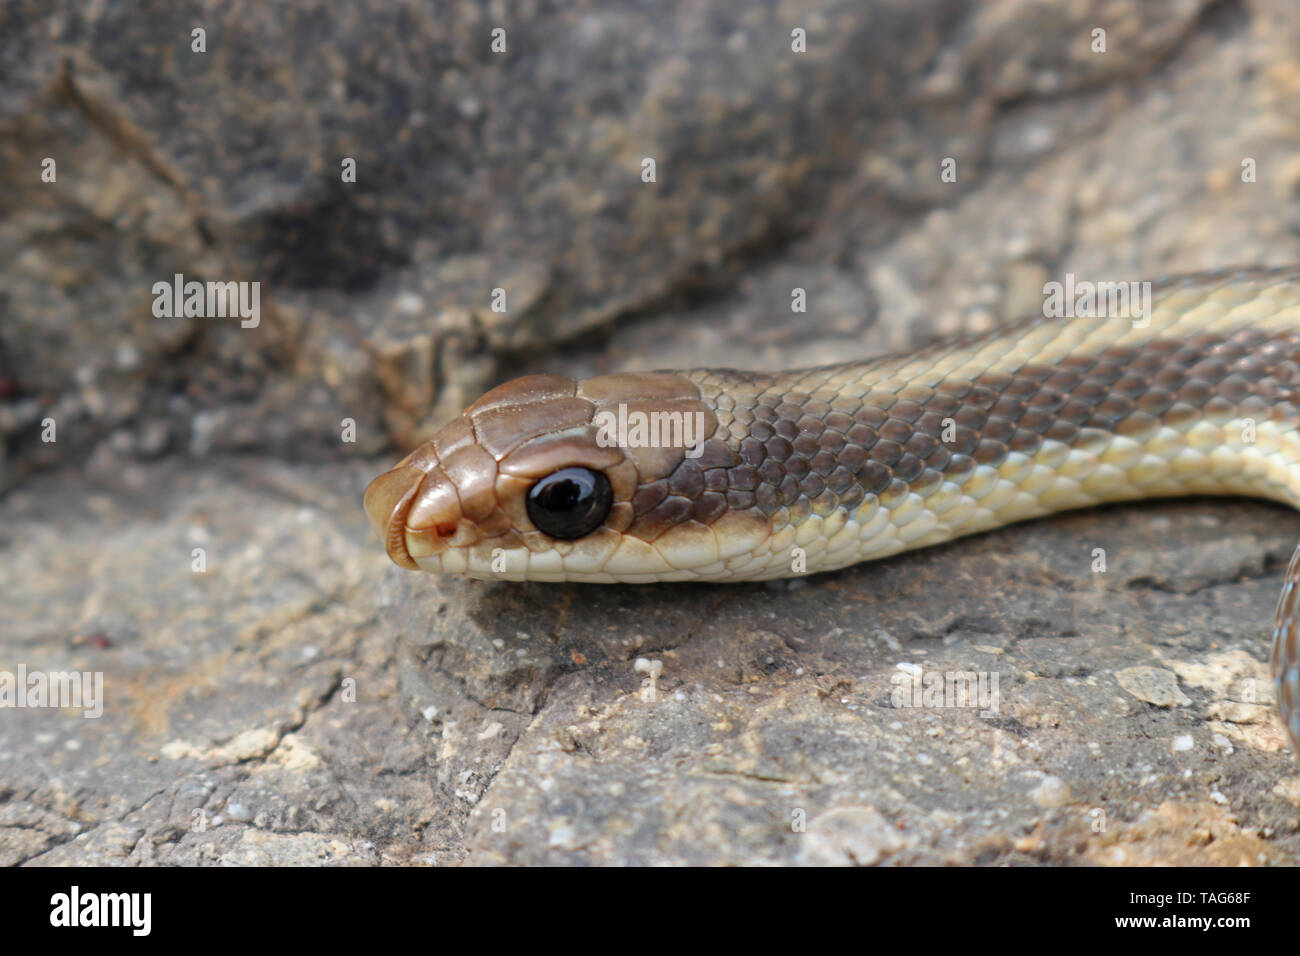 Coast Patch-nosed Snake (Salvadora hexalepis virgultea) Stock Photo